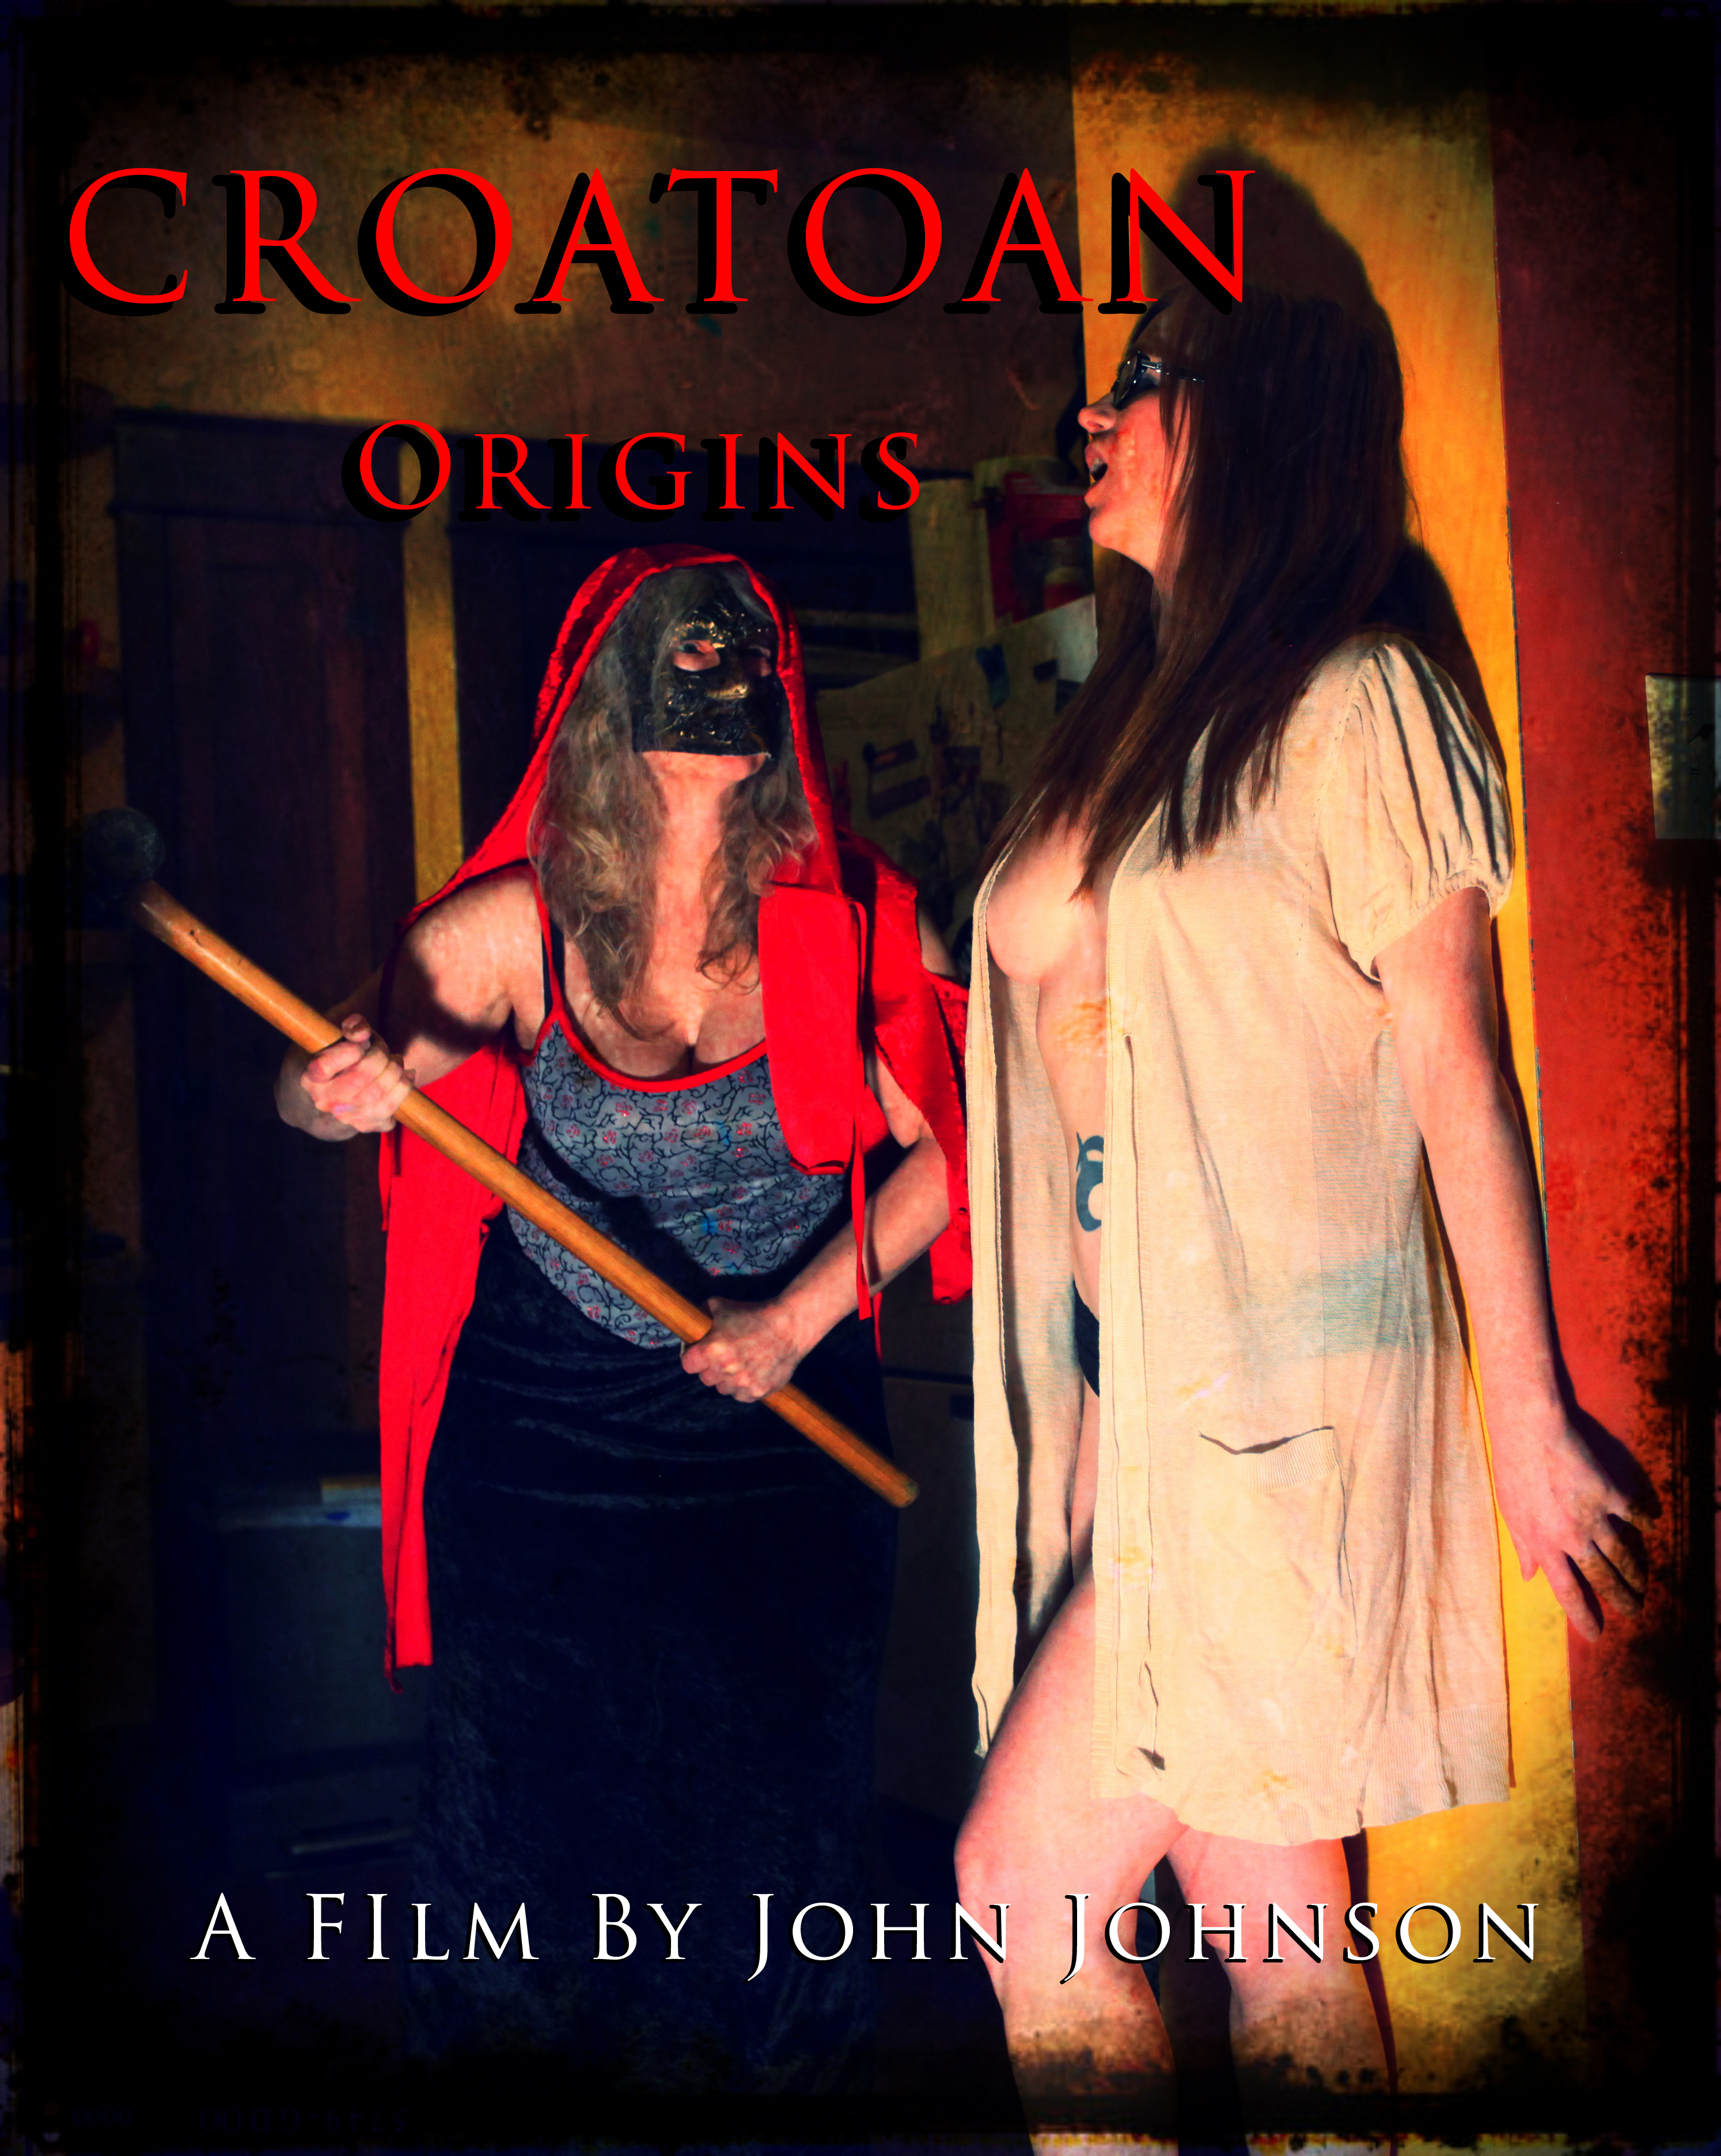 Croatoan Origins (2015) Screenshot 1